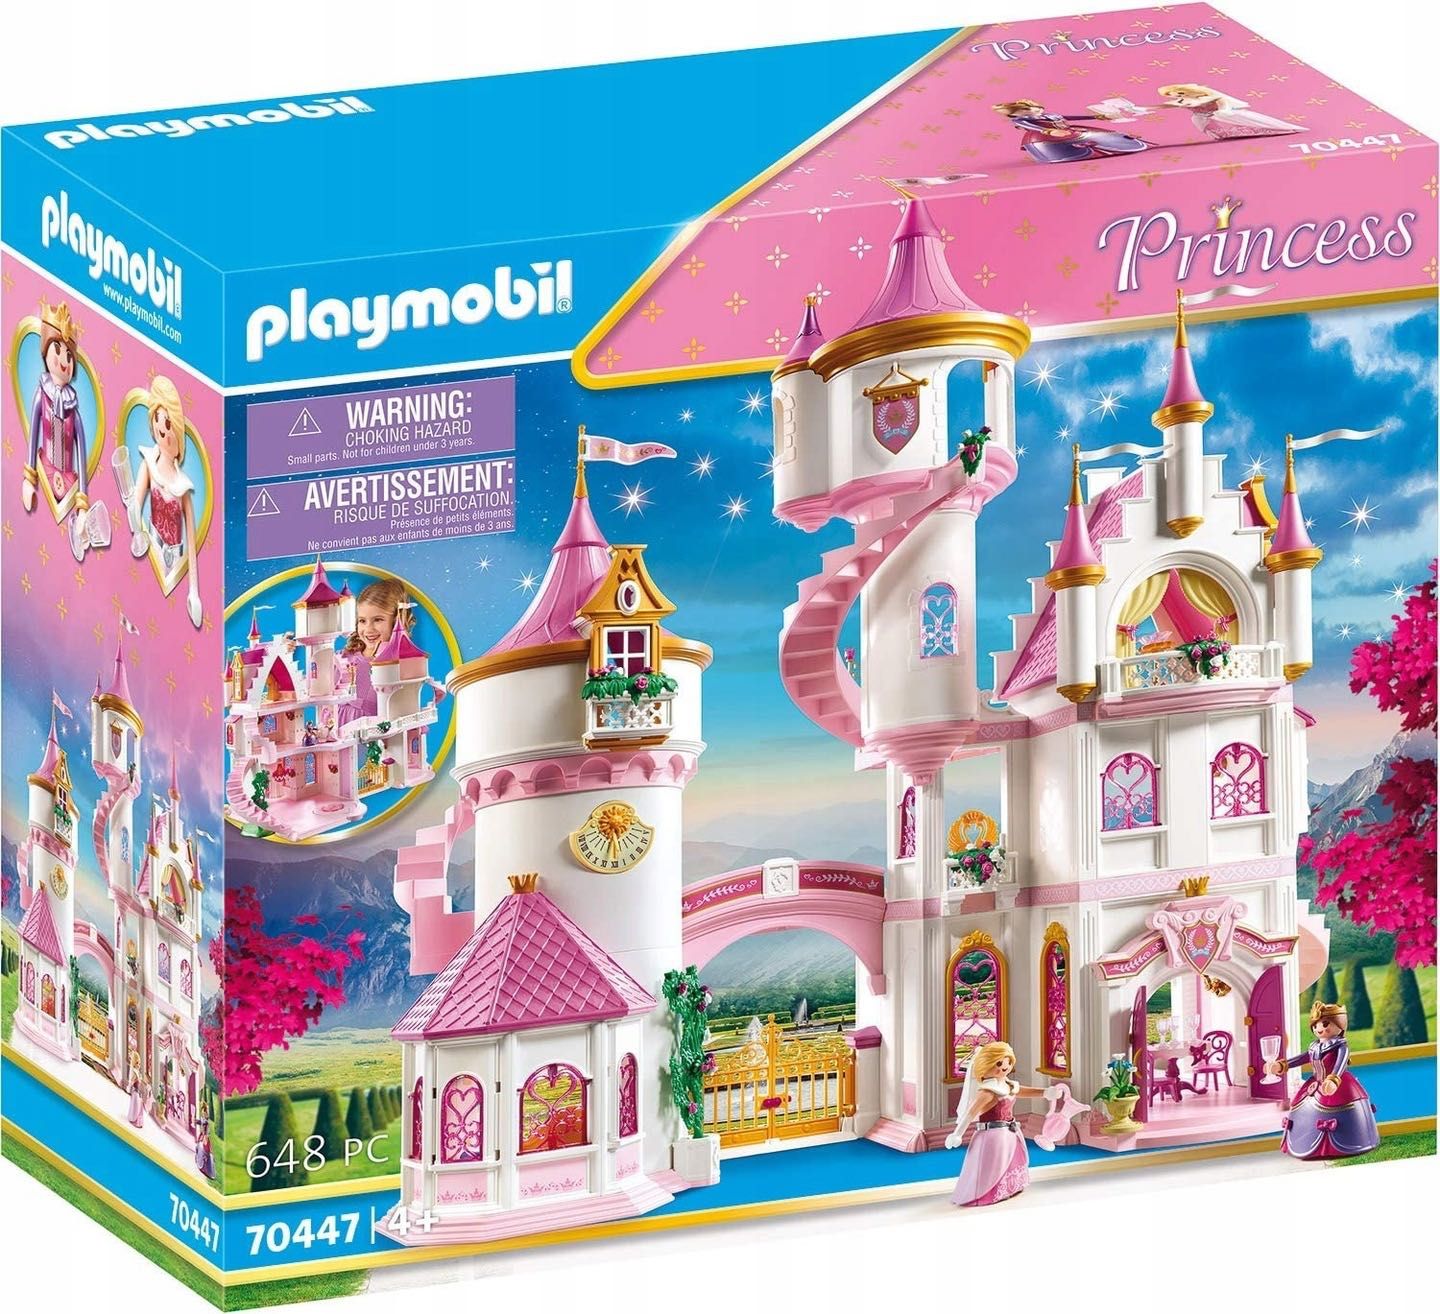 Playmobil Princess 70447 Princess